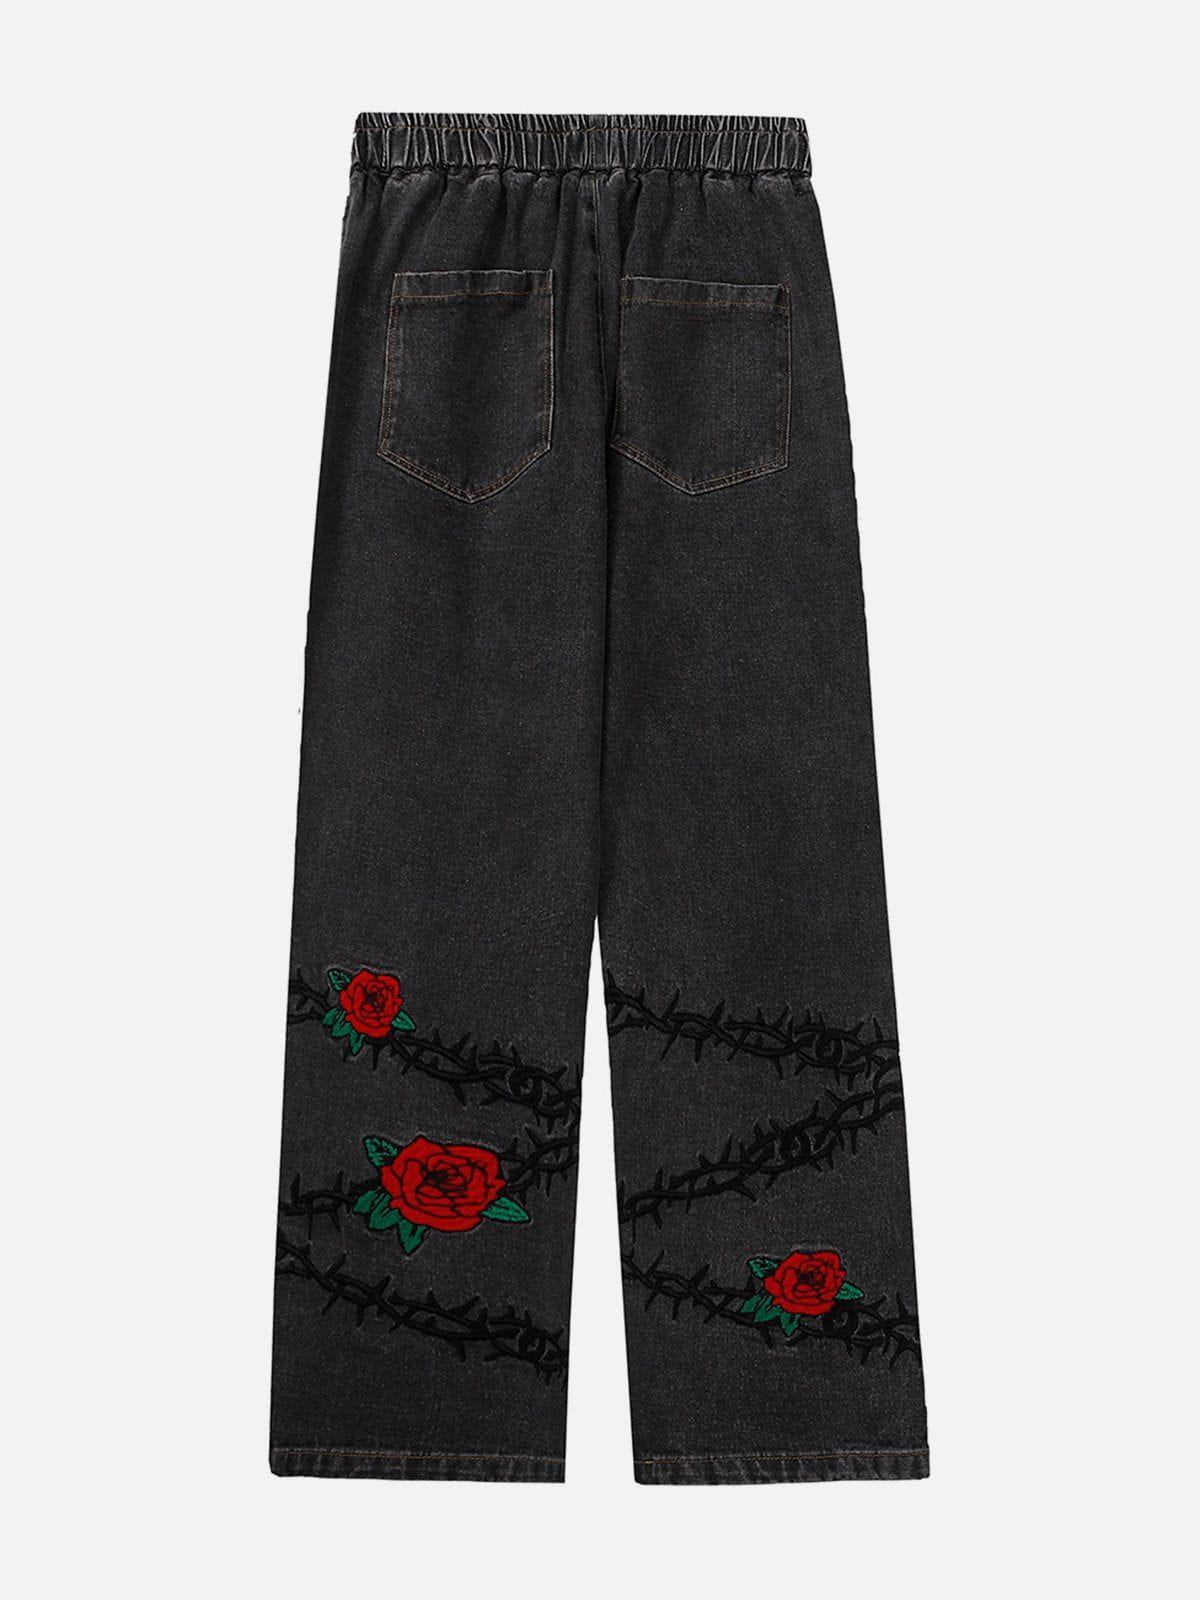 Eprezzy® - Embroidery Thorns Rose Jeans Streetwear Fashion - eprezzy.com